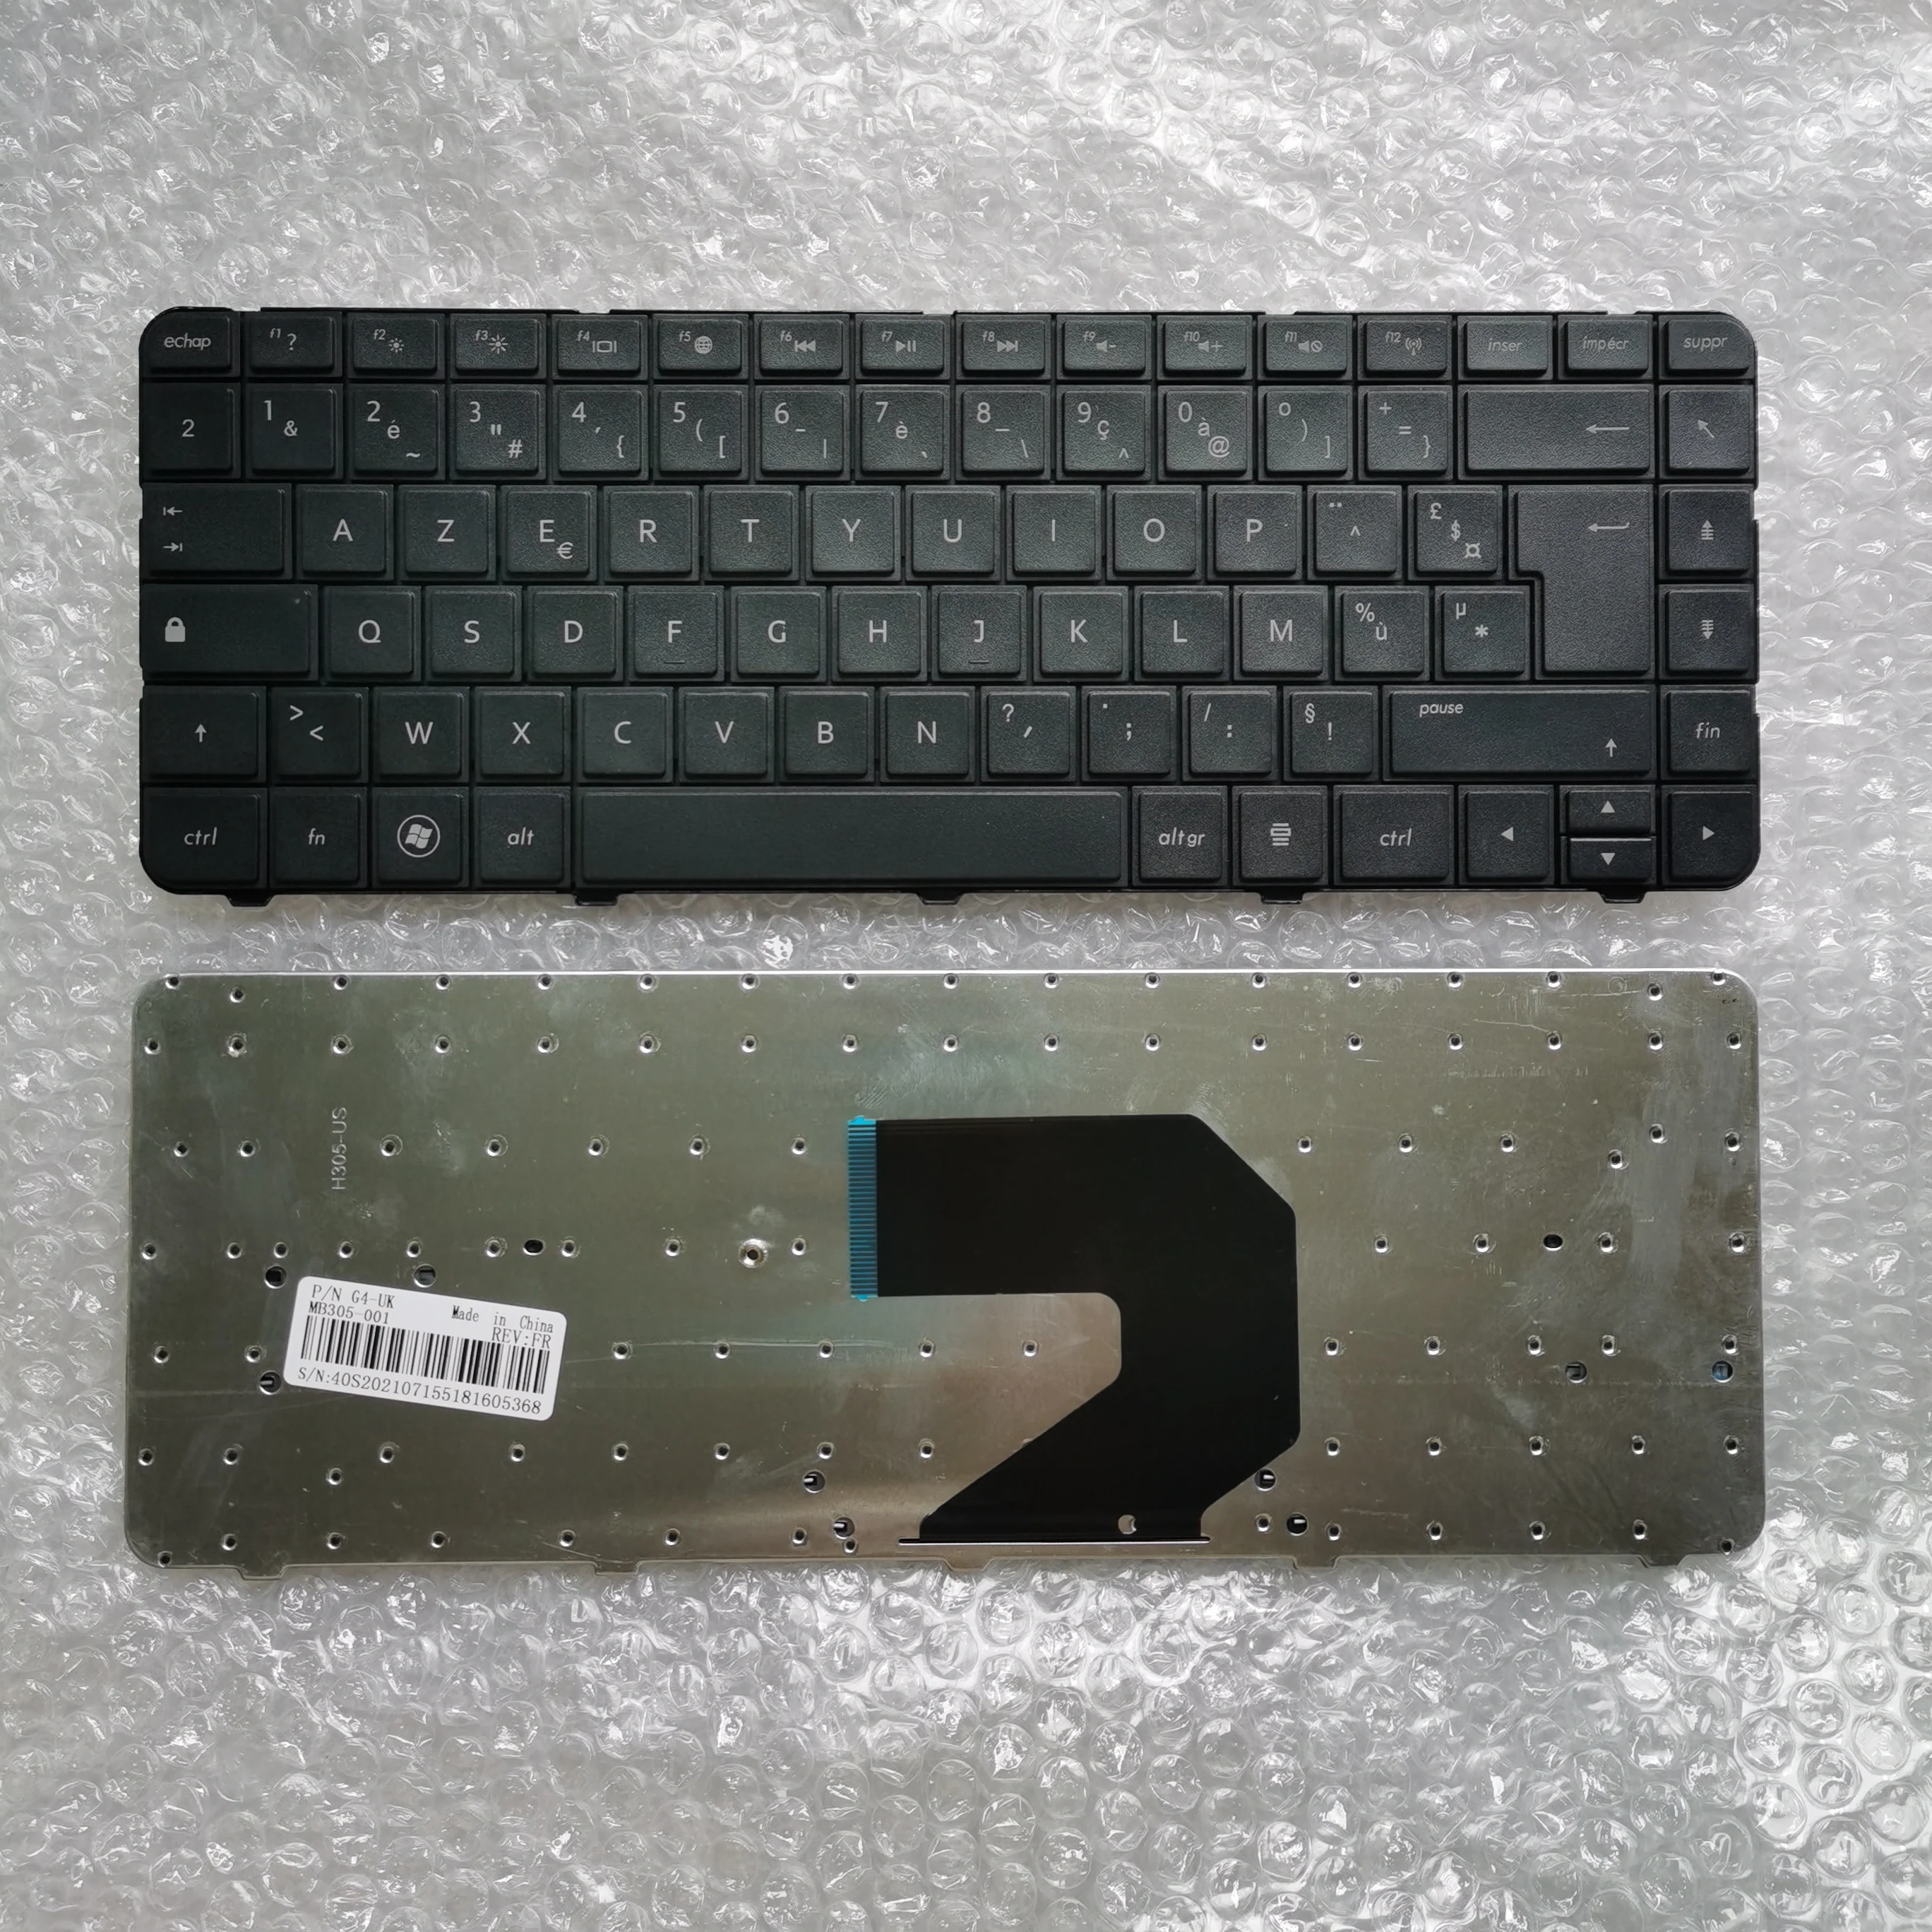 

Французская клавиатура XIN для HP Pavilion G4 G43 G4-1000 G6 G6-1000 G6S G6T CQ43 CQ43-100 CQ57 G57 430 630 ноутбук с клавиатурой AZERTY Keyboard FR